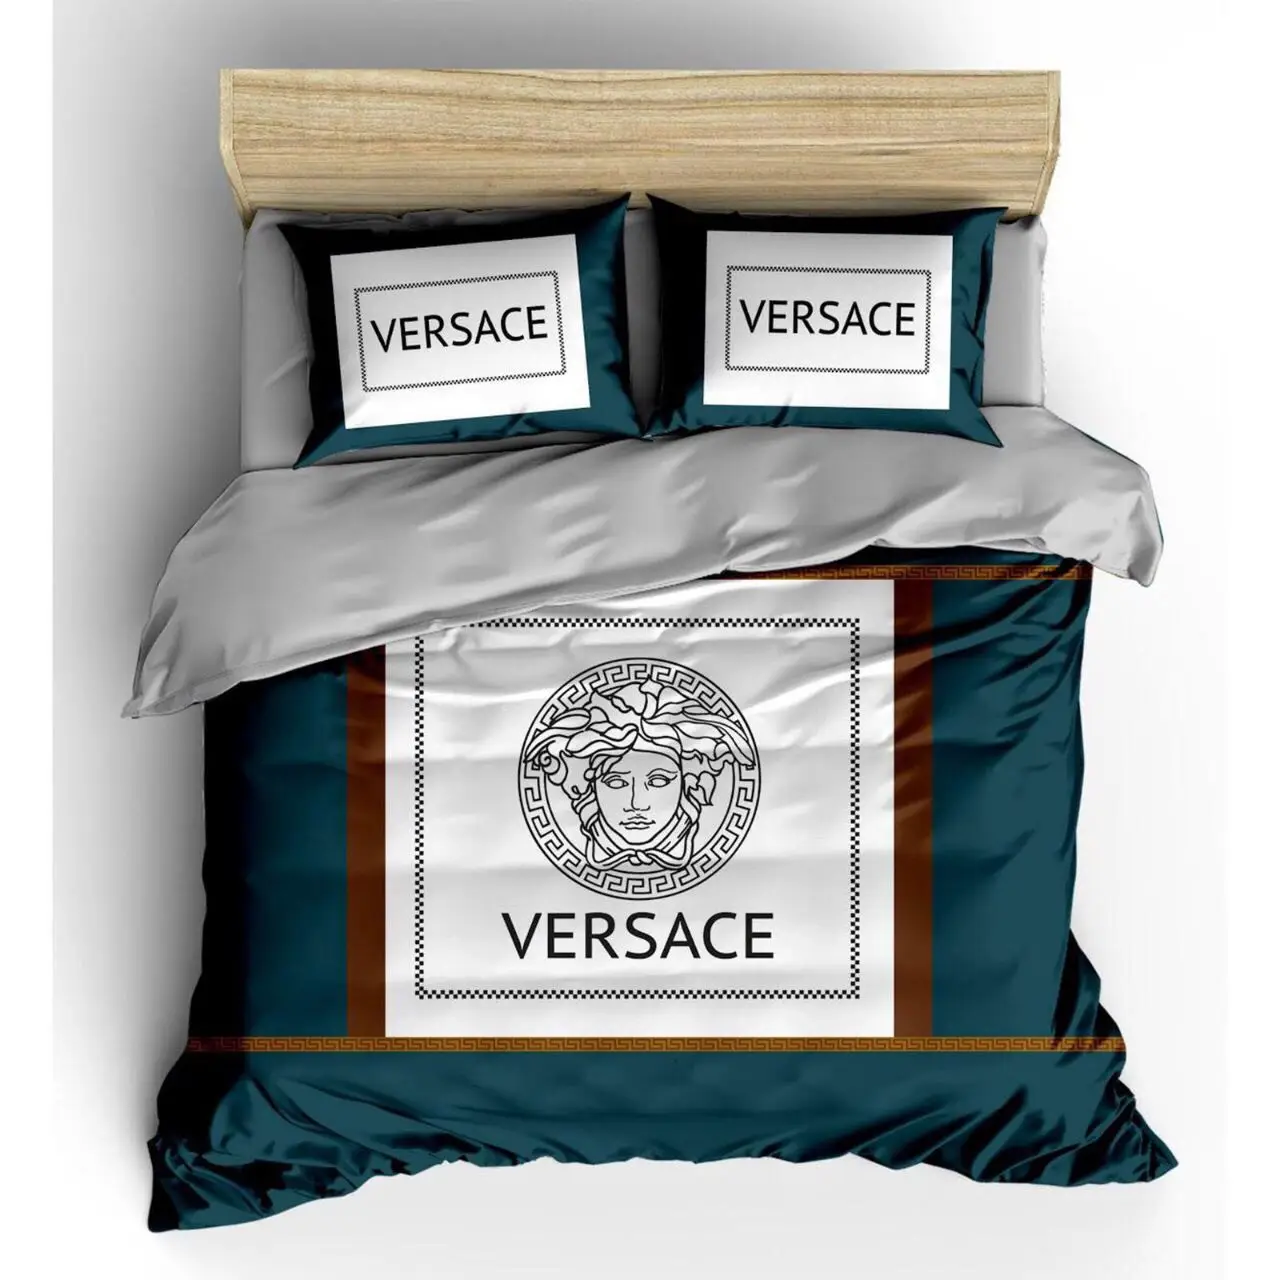 Versace Bedding Set 53